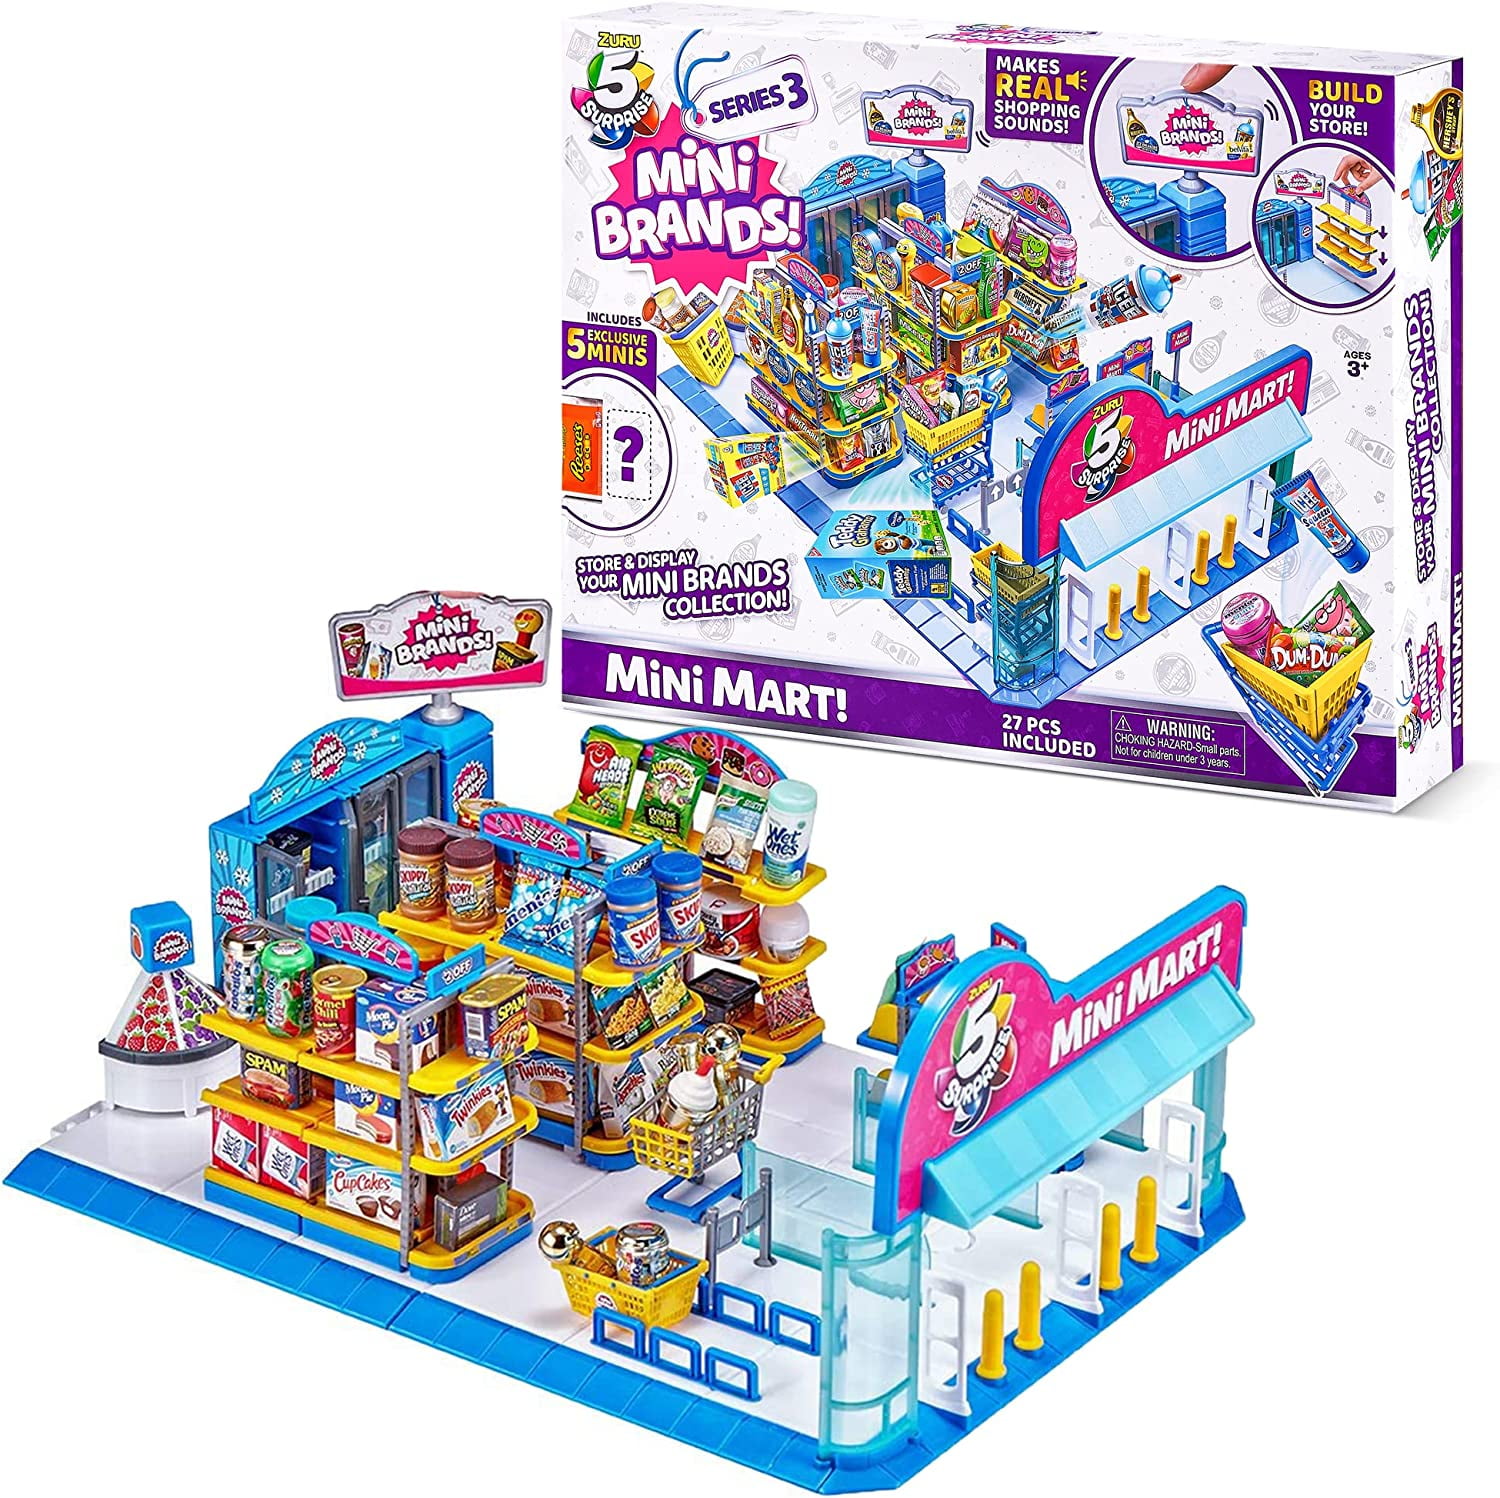 Zuru Toy Mini Brands Walmart Exclusive Store Donor Lot